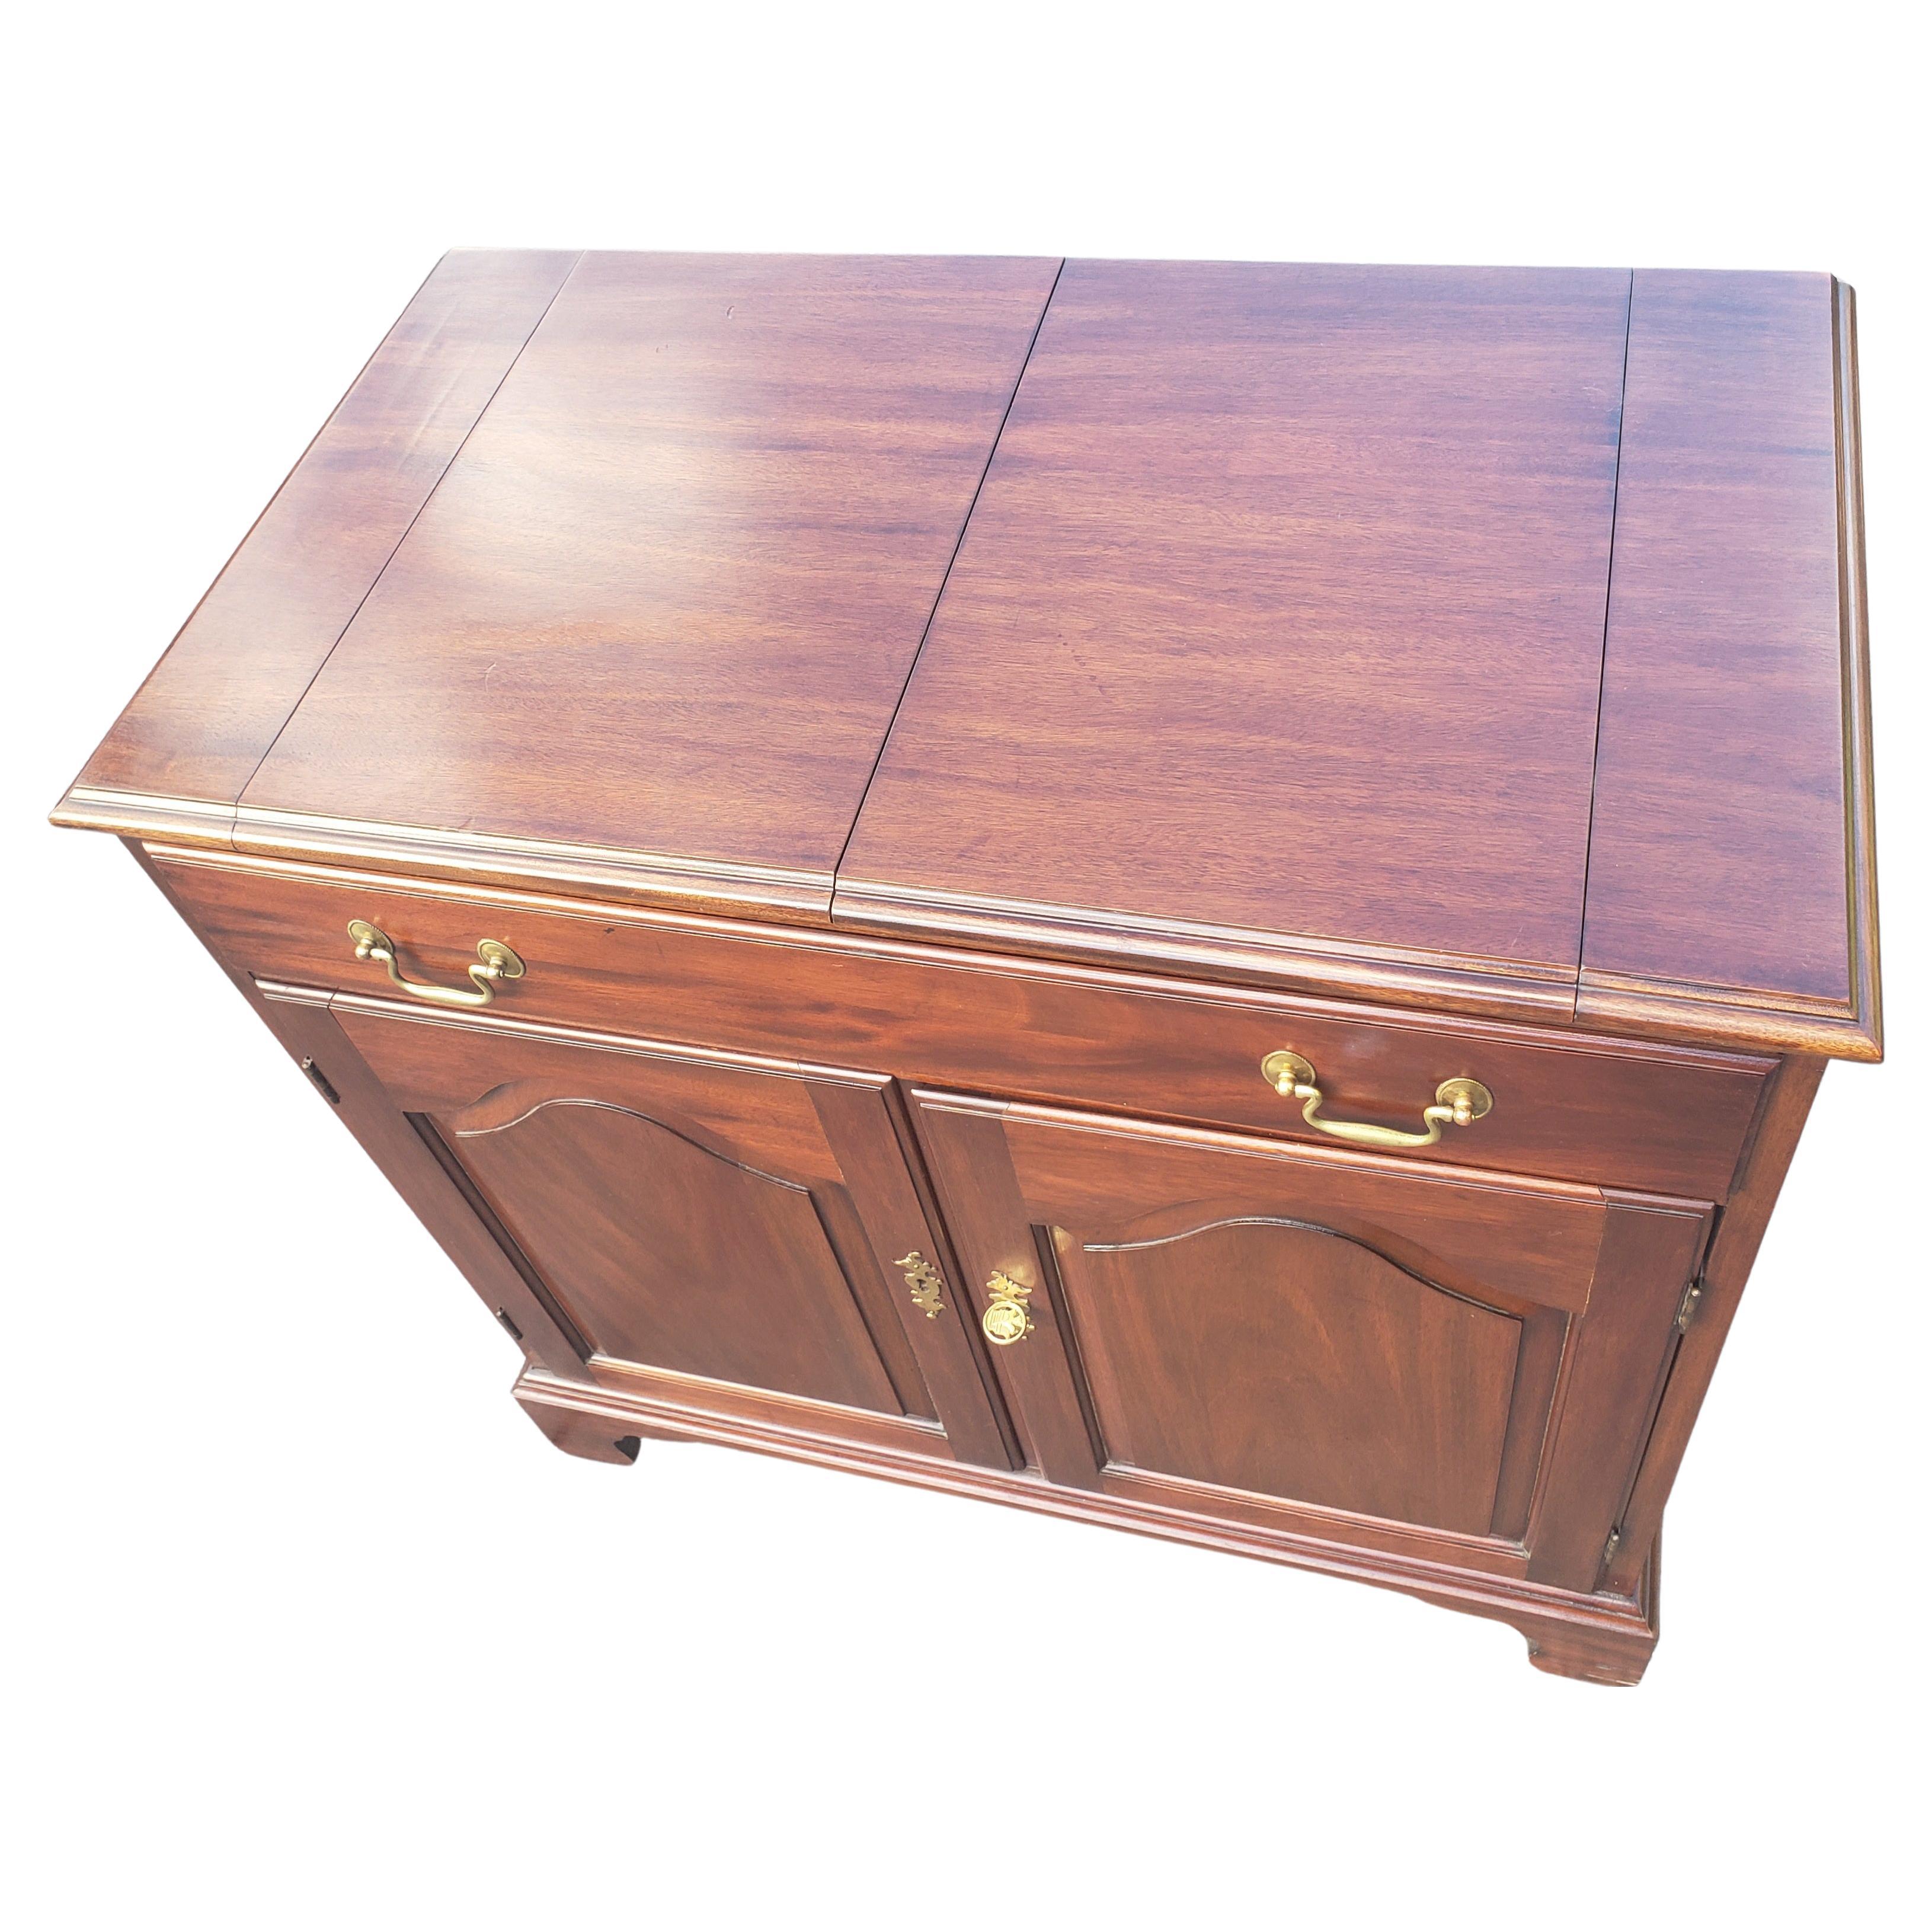 Woodwork Henkel Harris Mahogany Flip Top Rolling Buffet Server and Dry Bar Cabinet